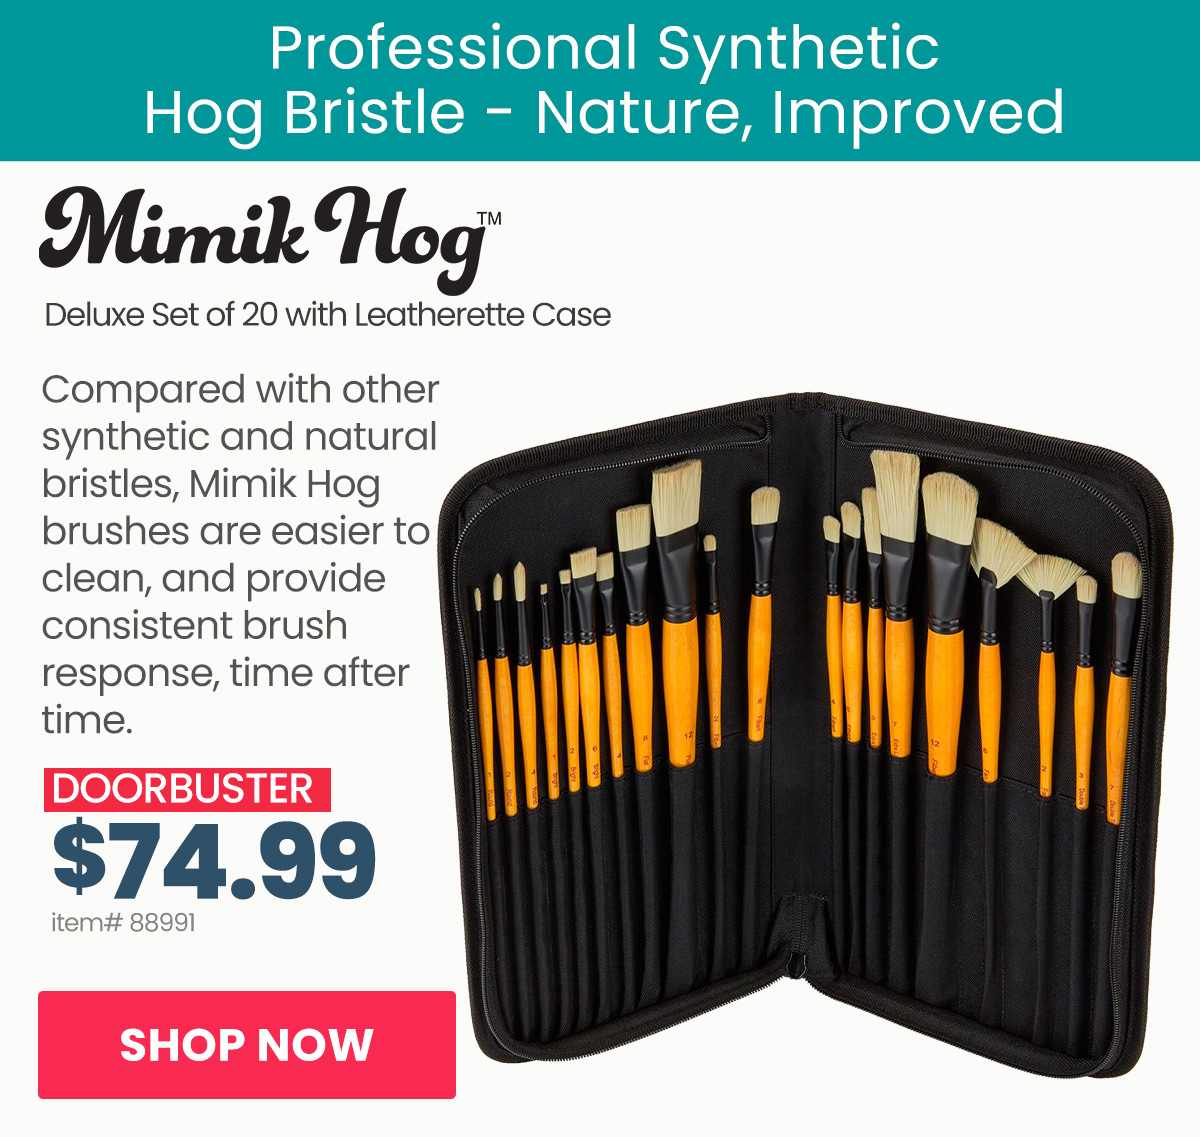 Mimik Hog Professional Synthetic Bristle Brush, Deluxe Set of 20 w/ Leatherette Case